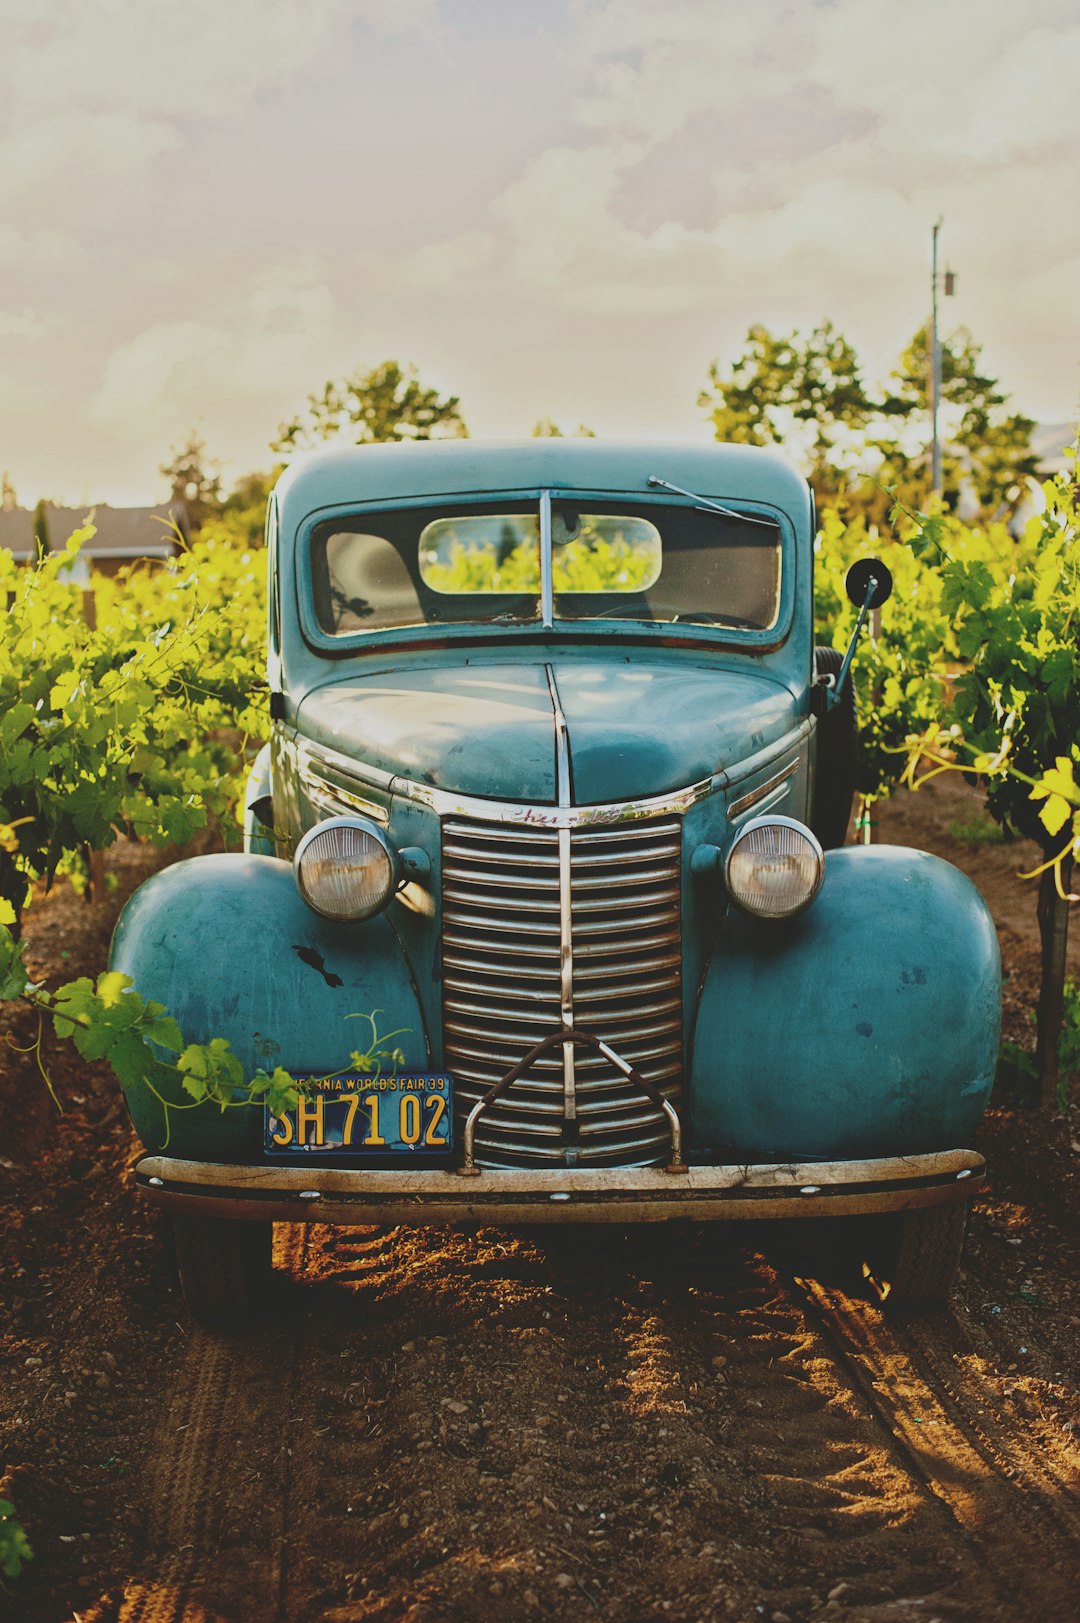 Blue vintage car on a dirt road